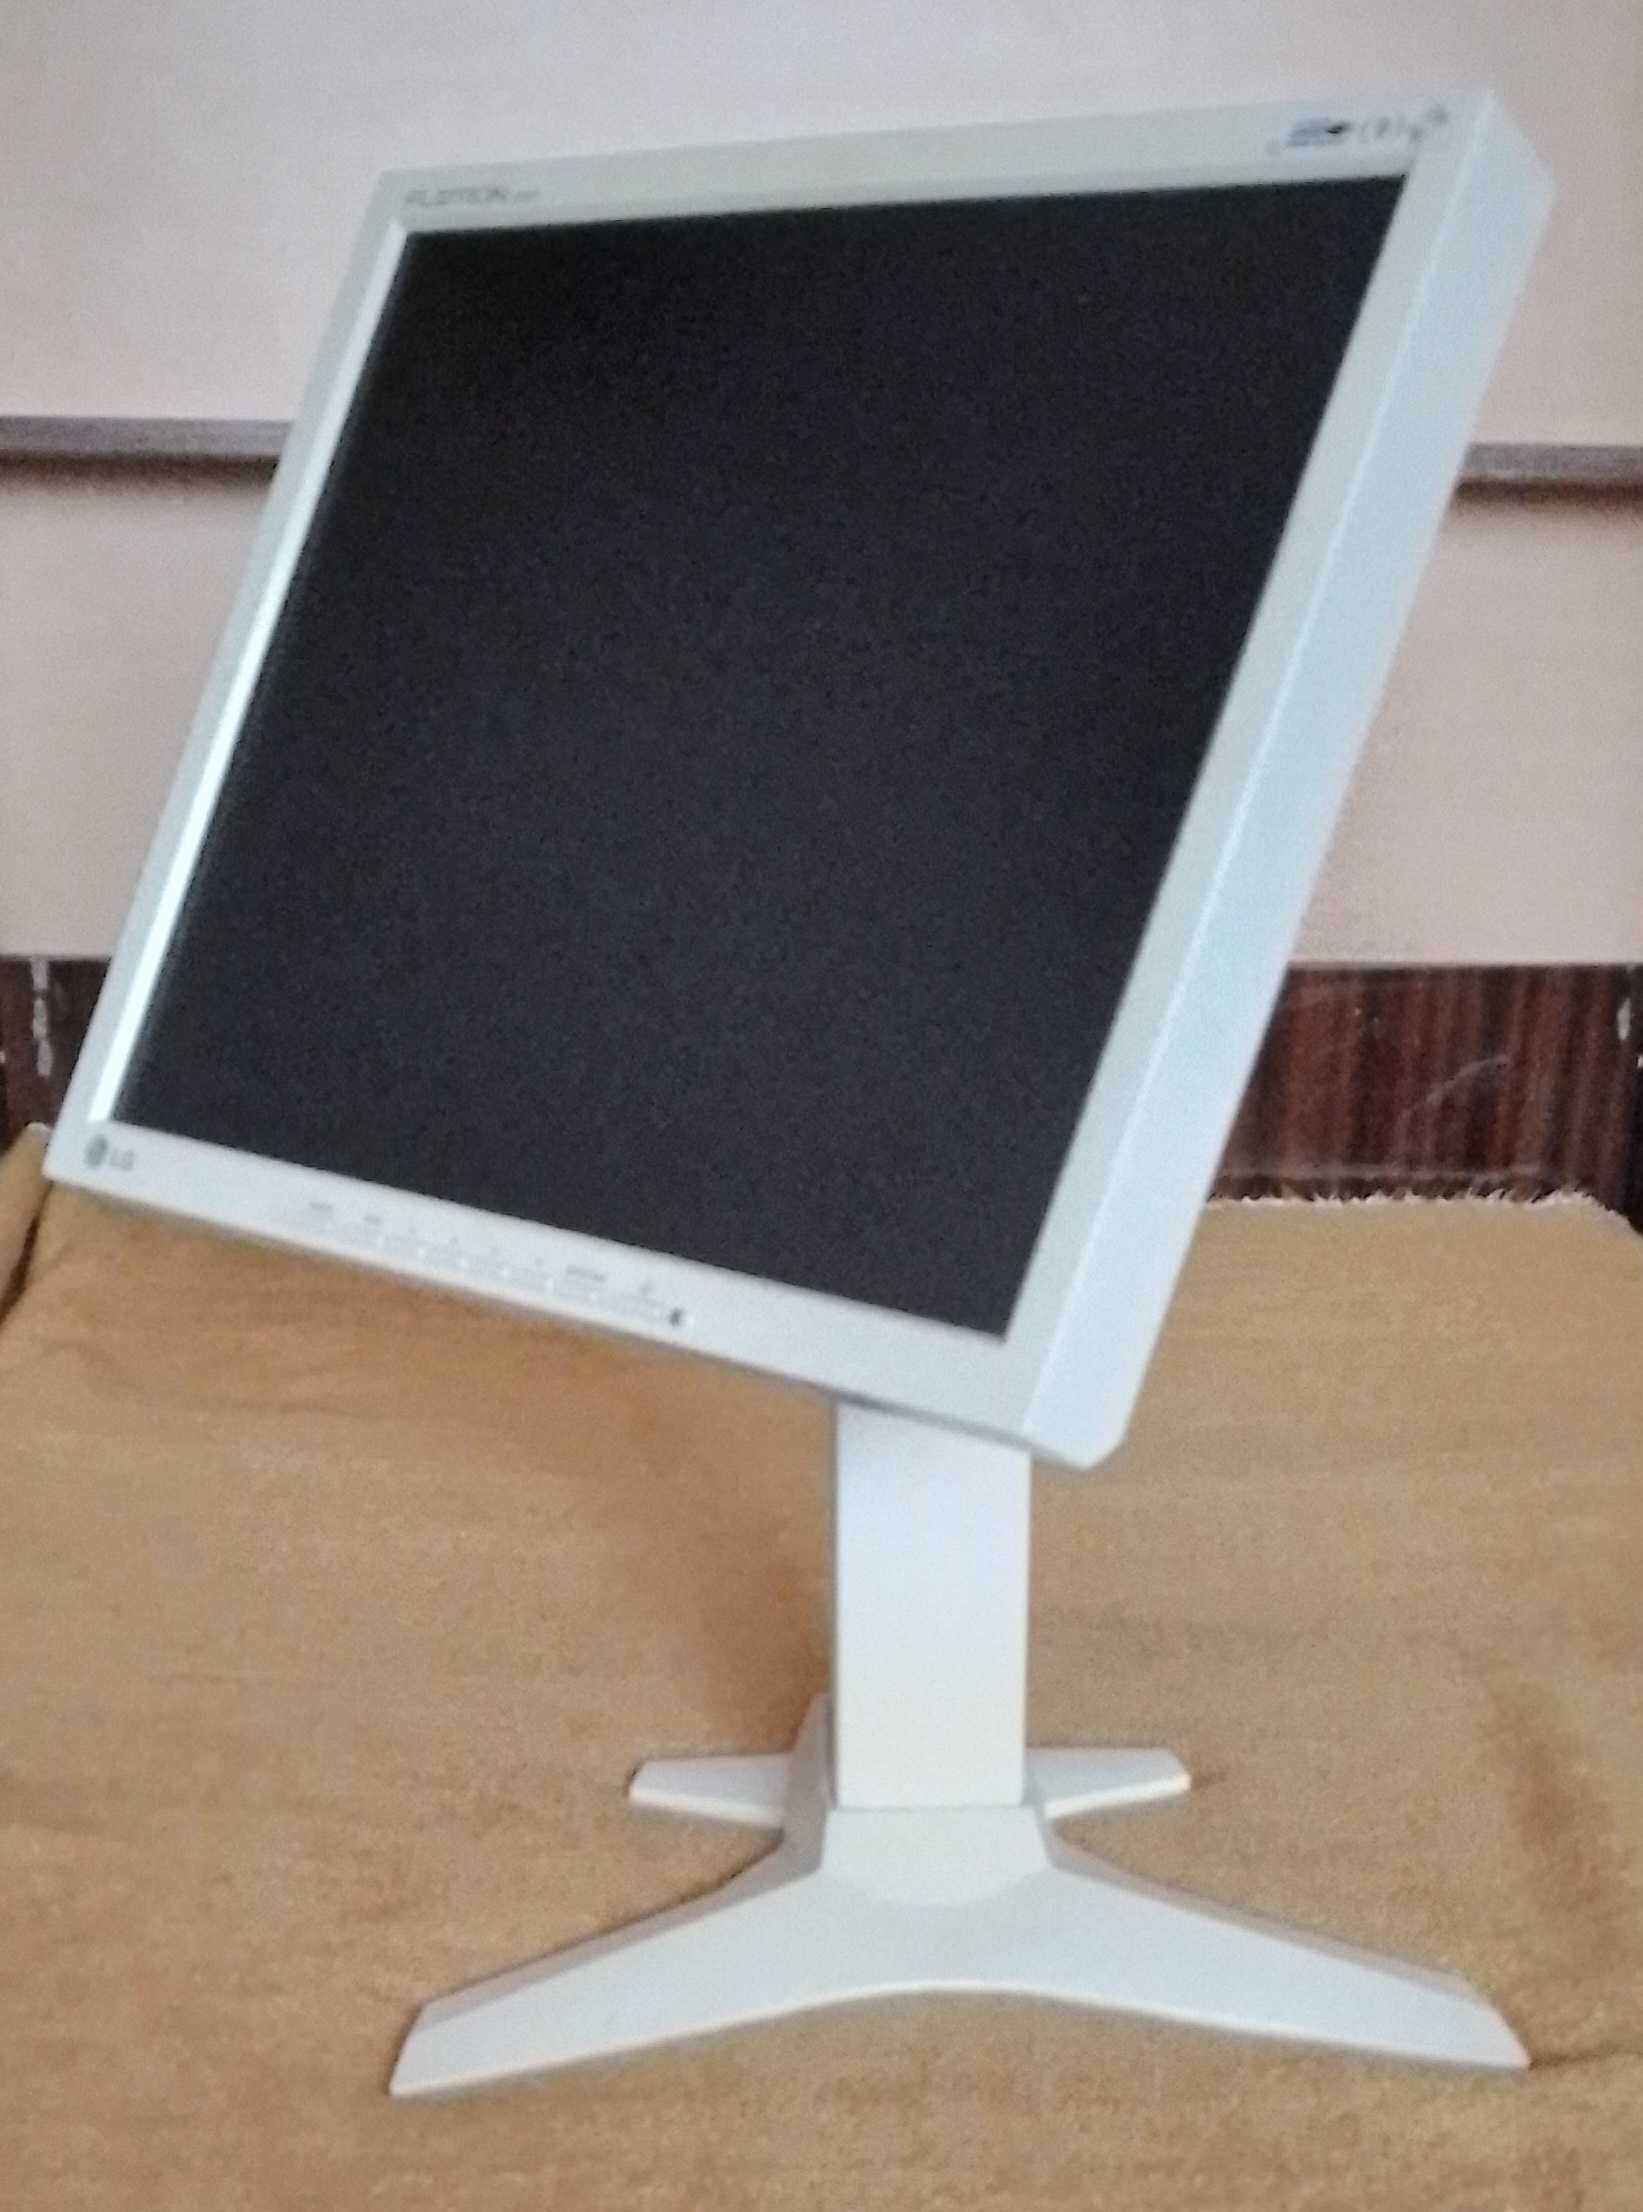 LCD Monitor LG. Made in Korea.